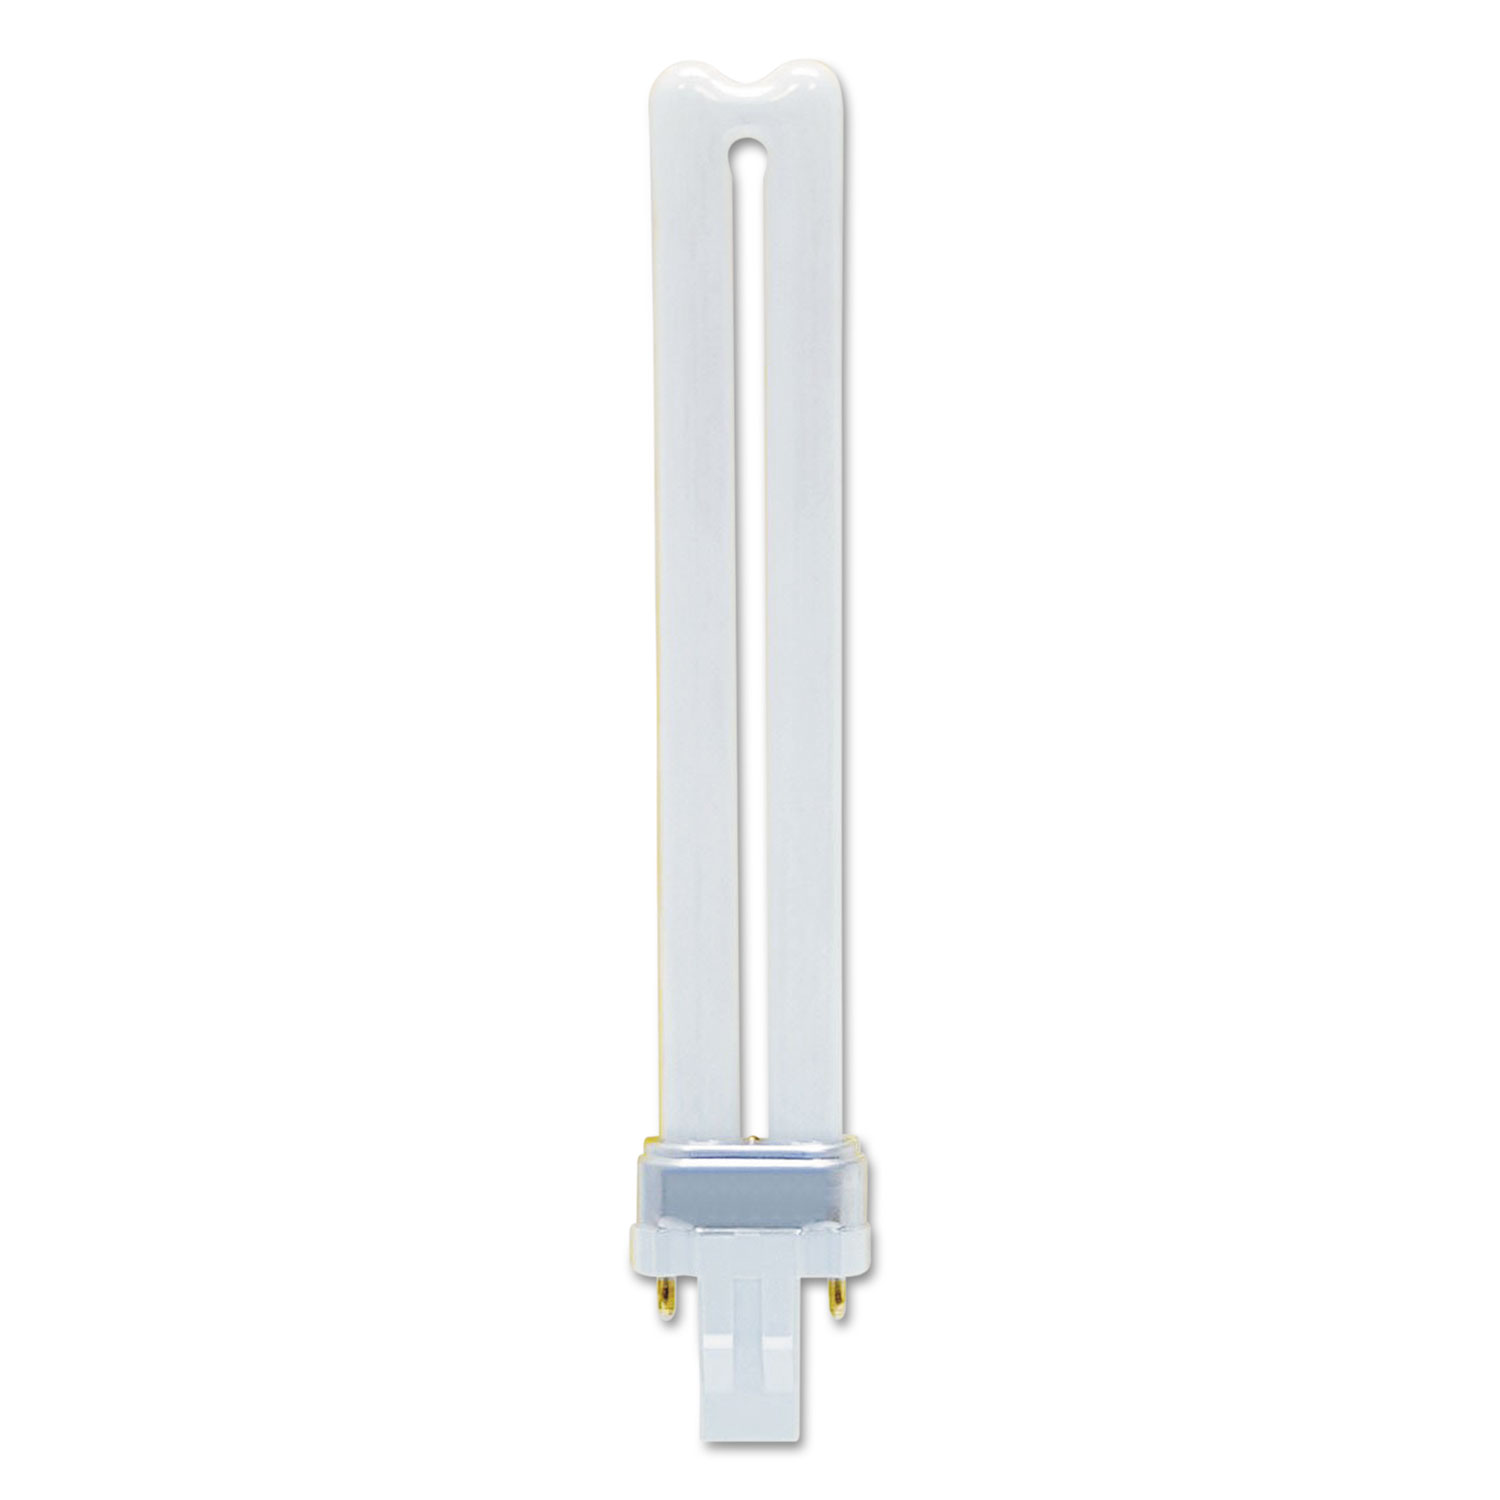 Ecolux Biax T4 Bulb, 825 Lumens, Soft White, 10/Pack